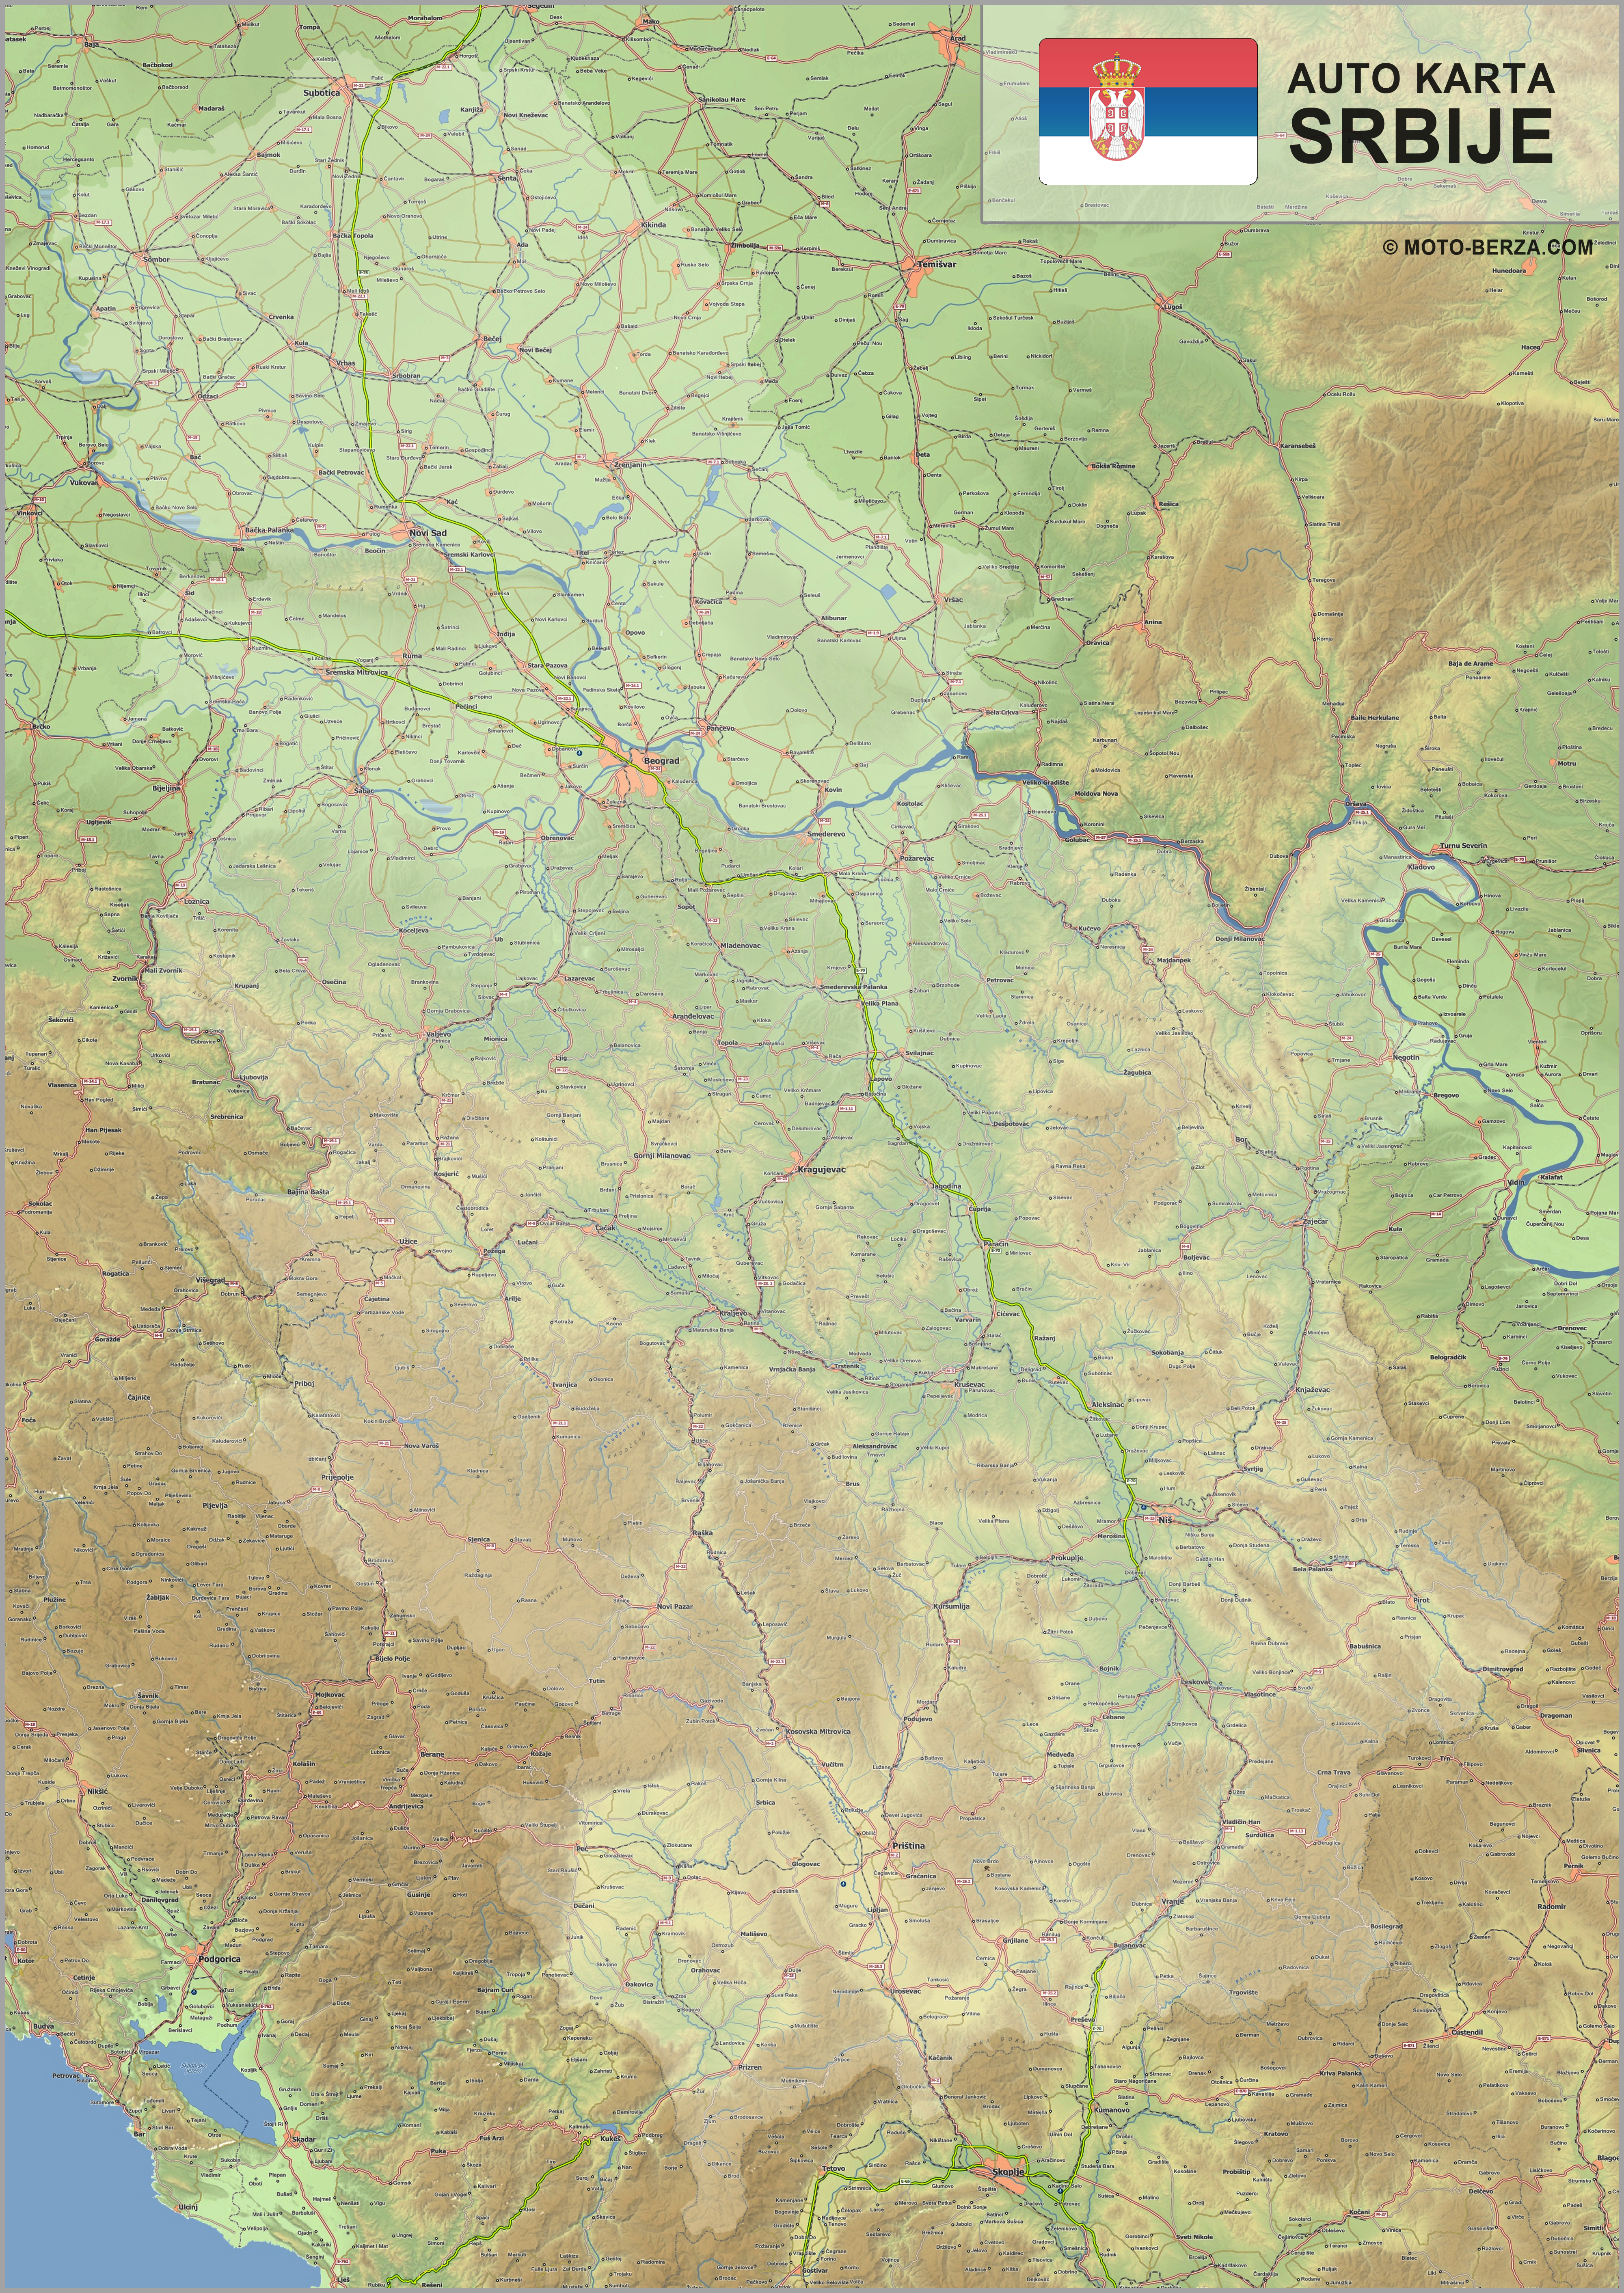 republika srbija mapa Mapa srbije   Auto karta Srbije   Geografska karta sa putevima republika srbija mapa